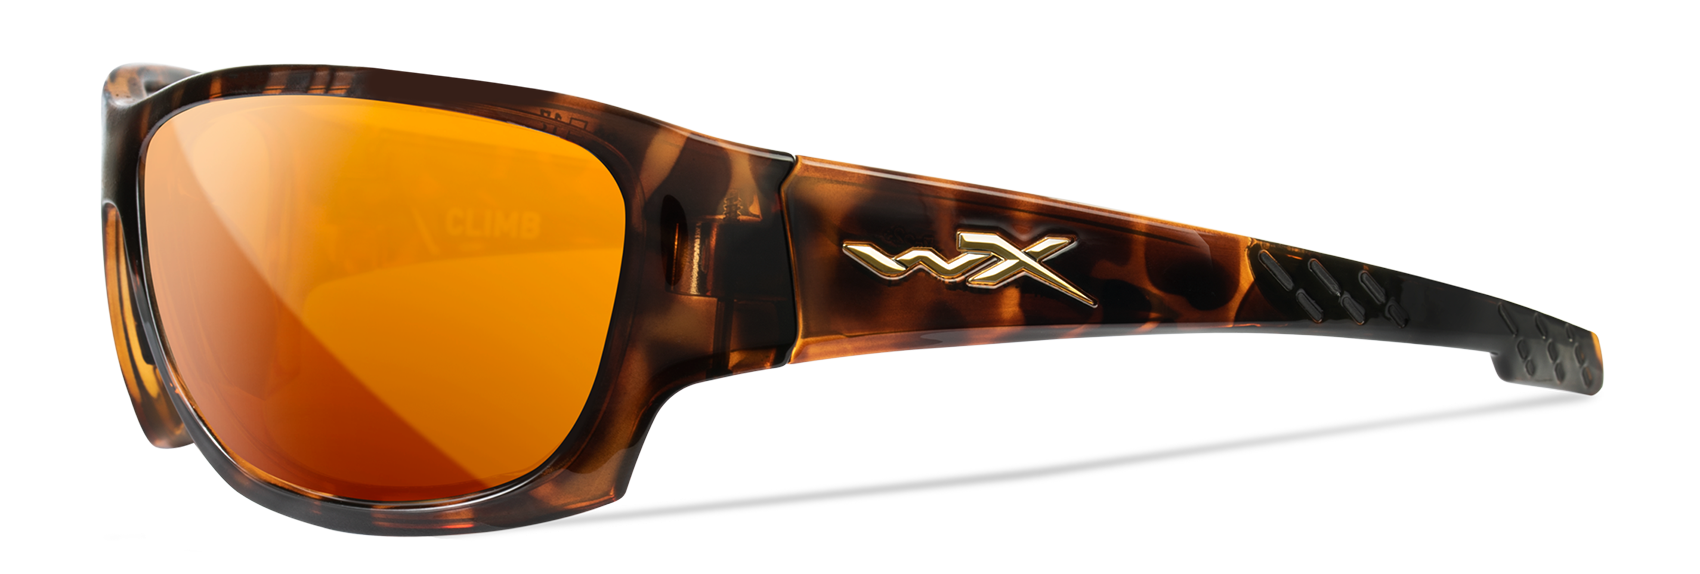 Wiley X Climb Sunglasses, 2 colors